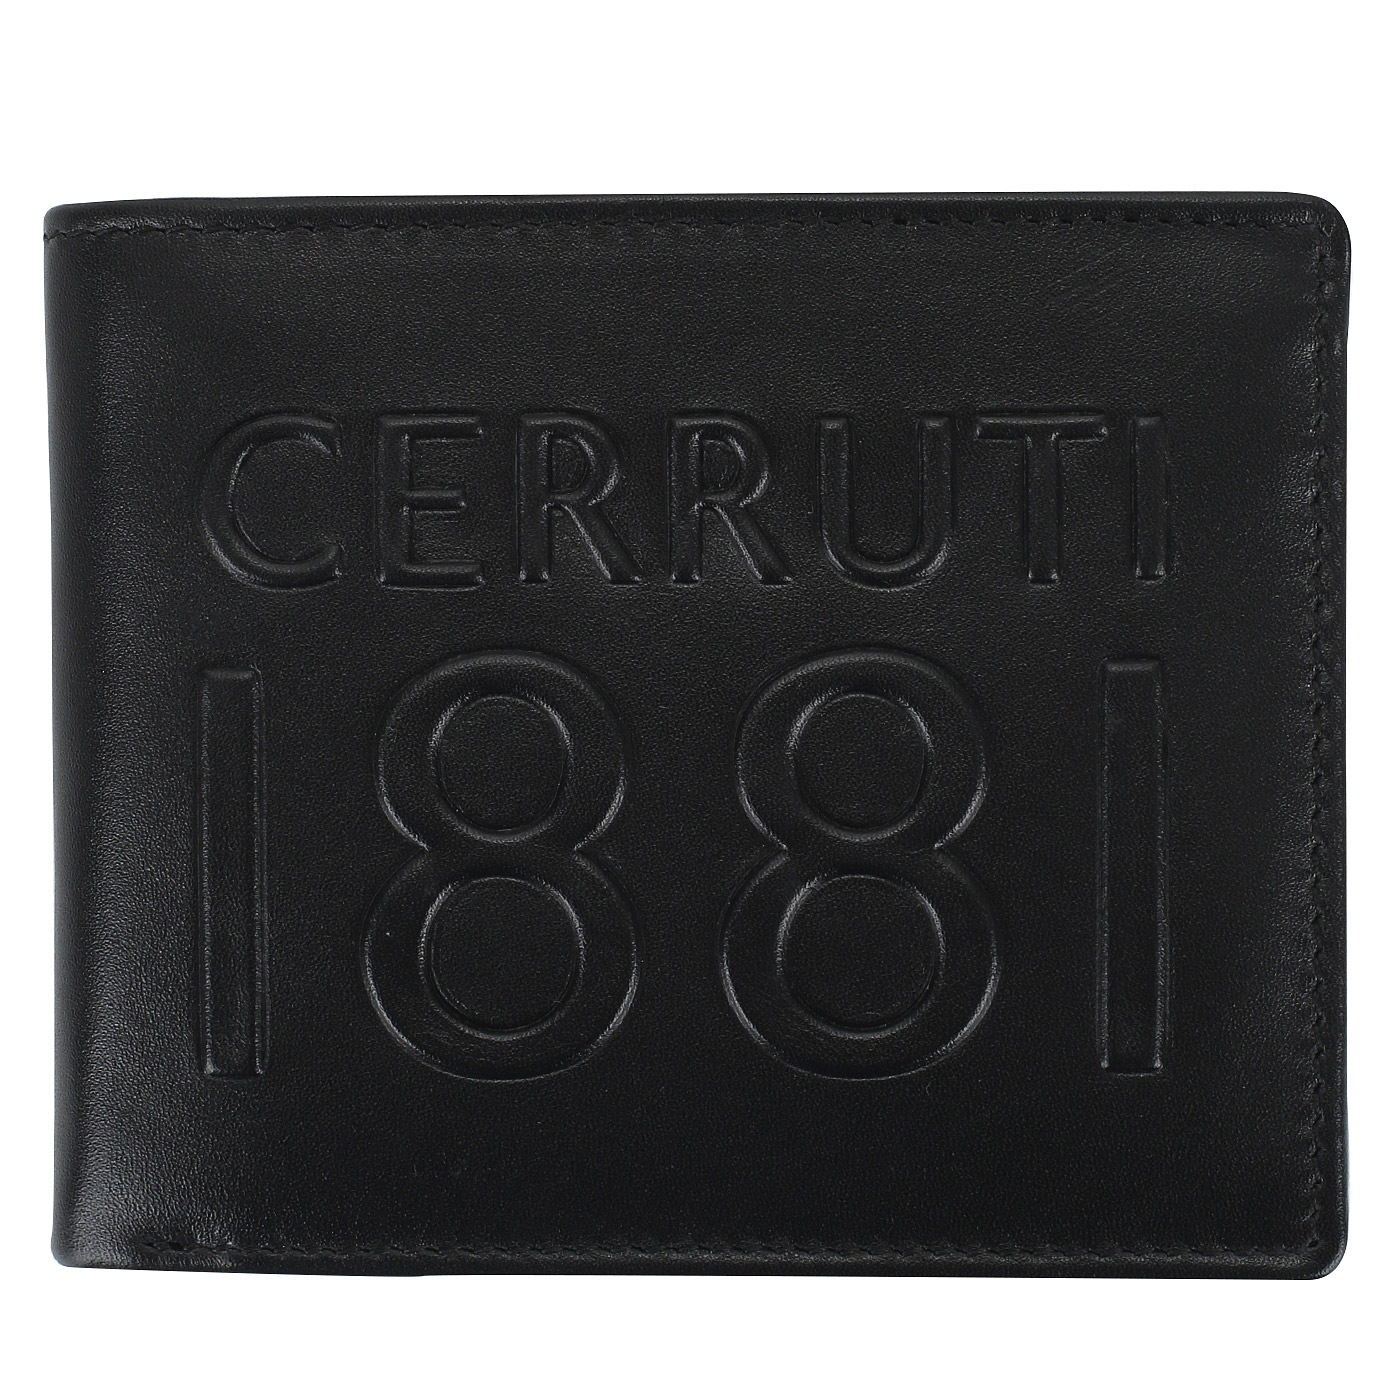 Cerruti 1881 Портмоне с логотипом бренда